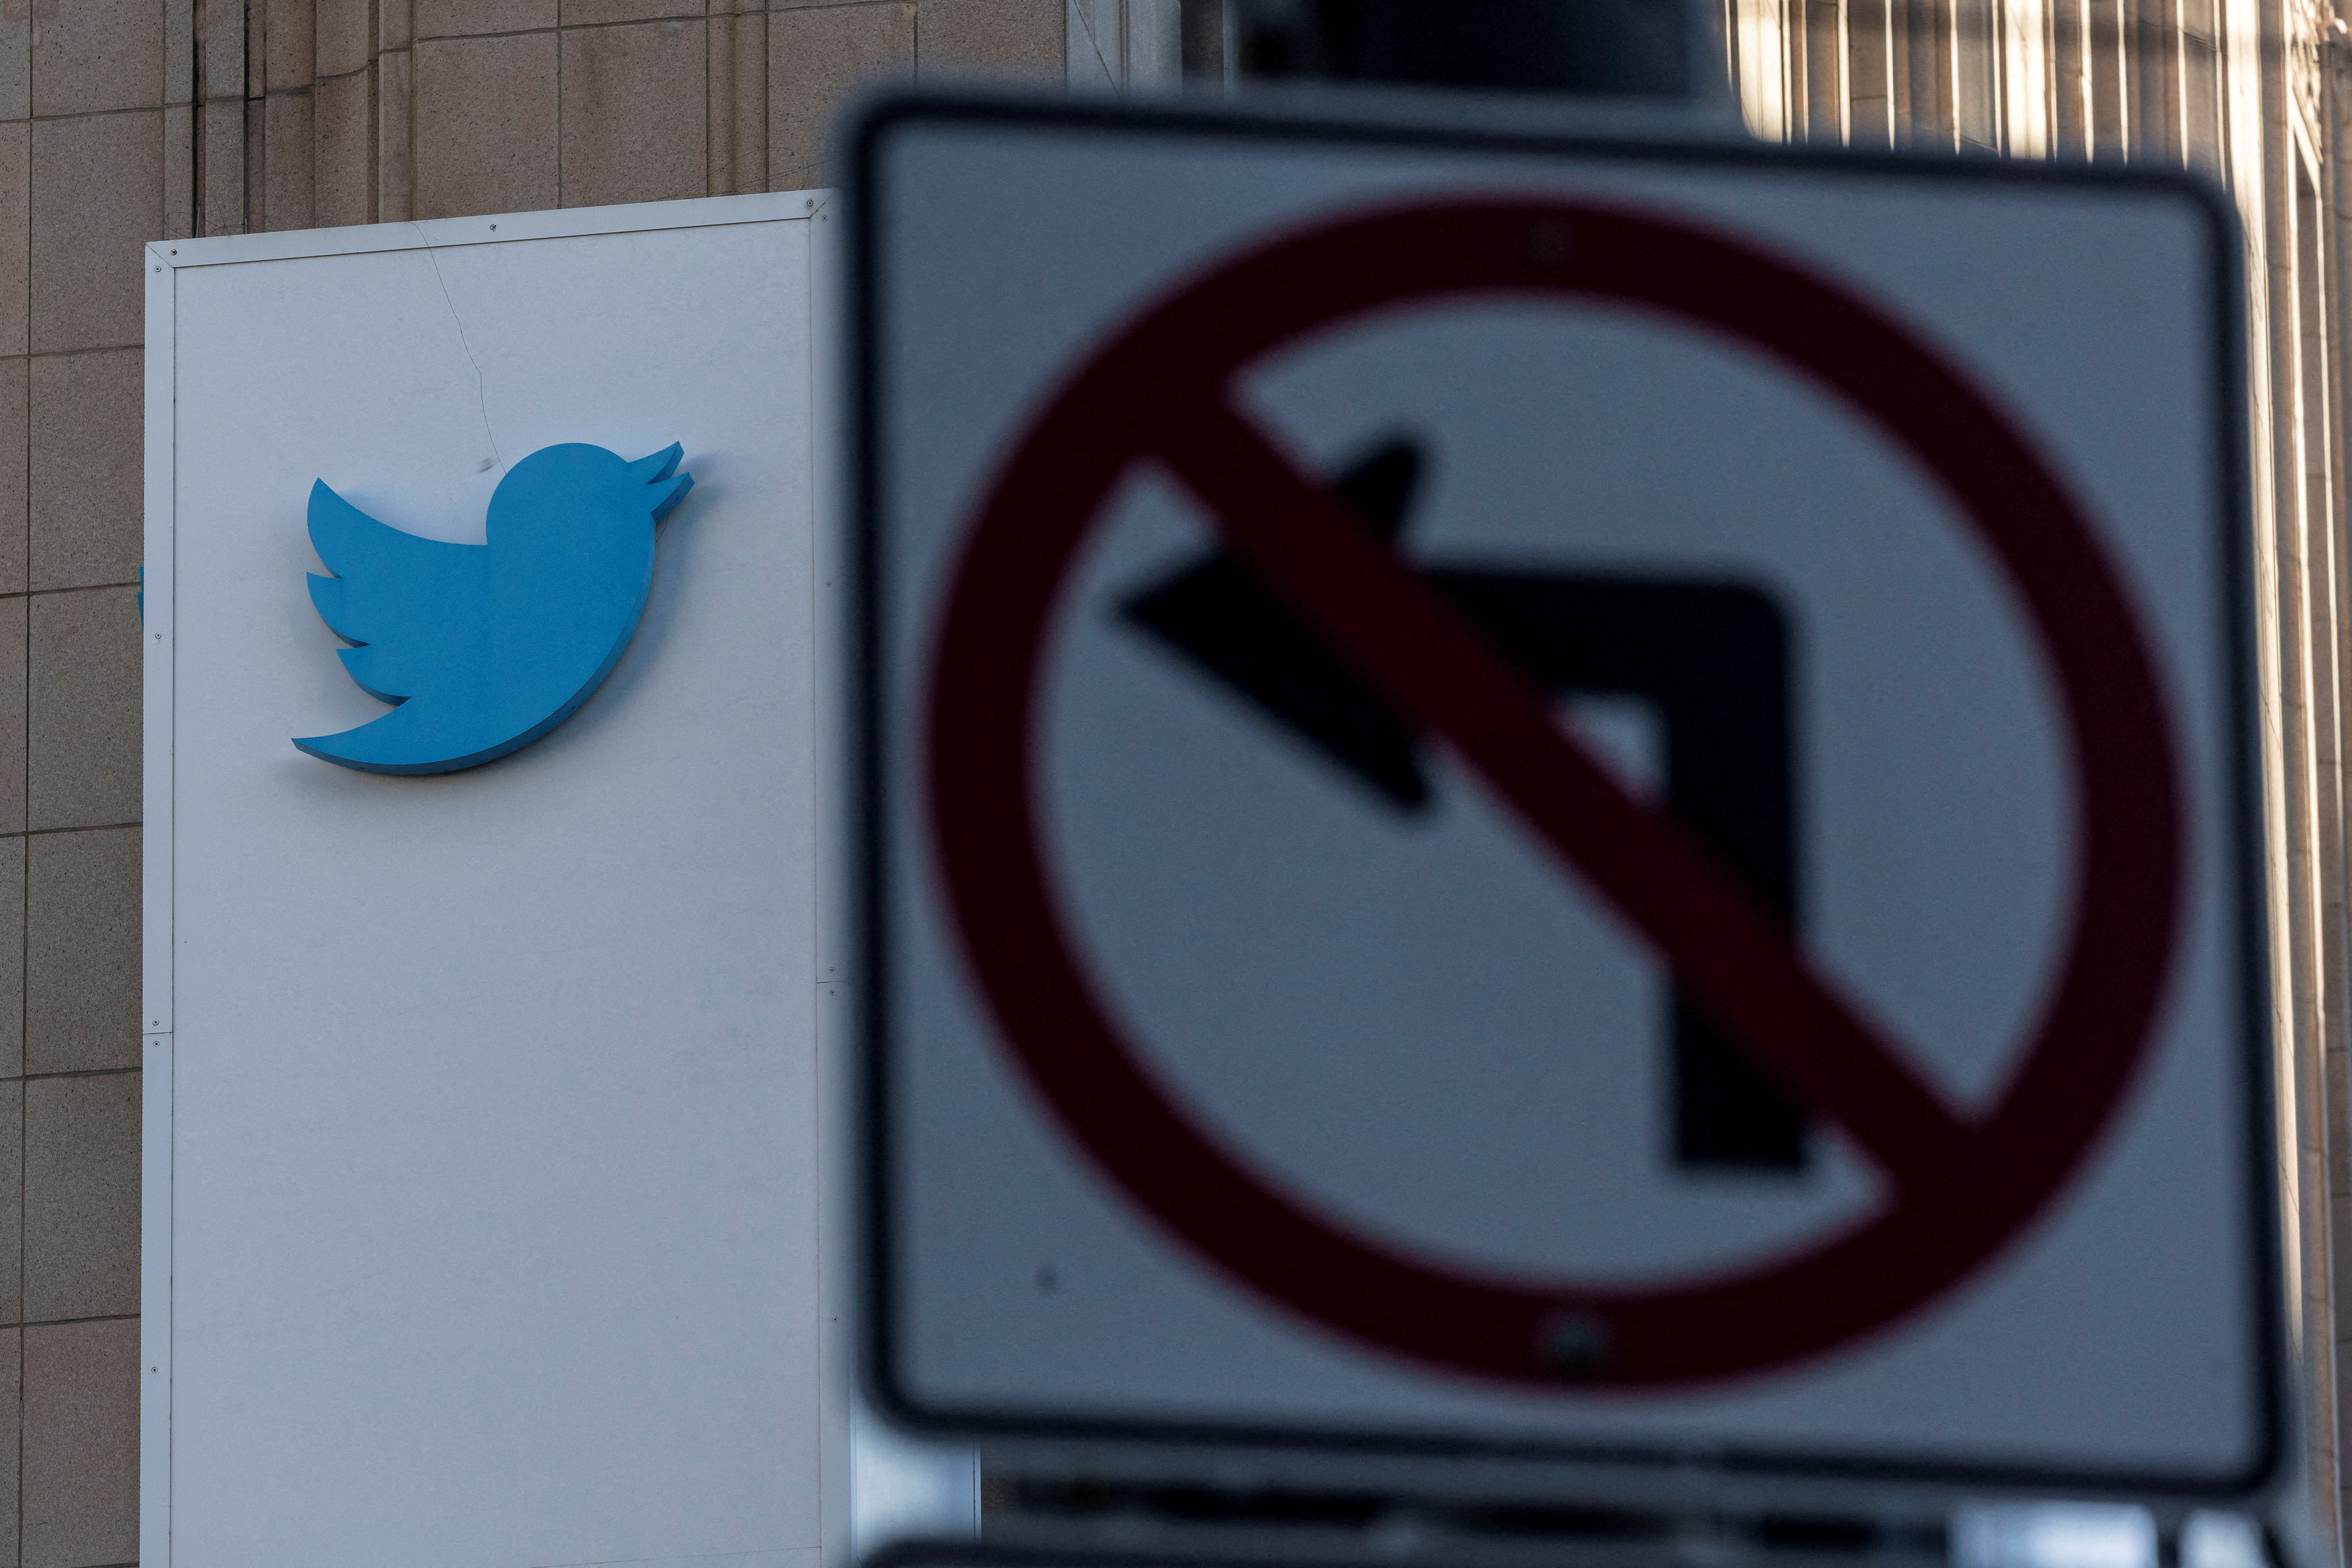 Twitter's corporate headquarters are in San Francisco, California